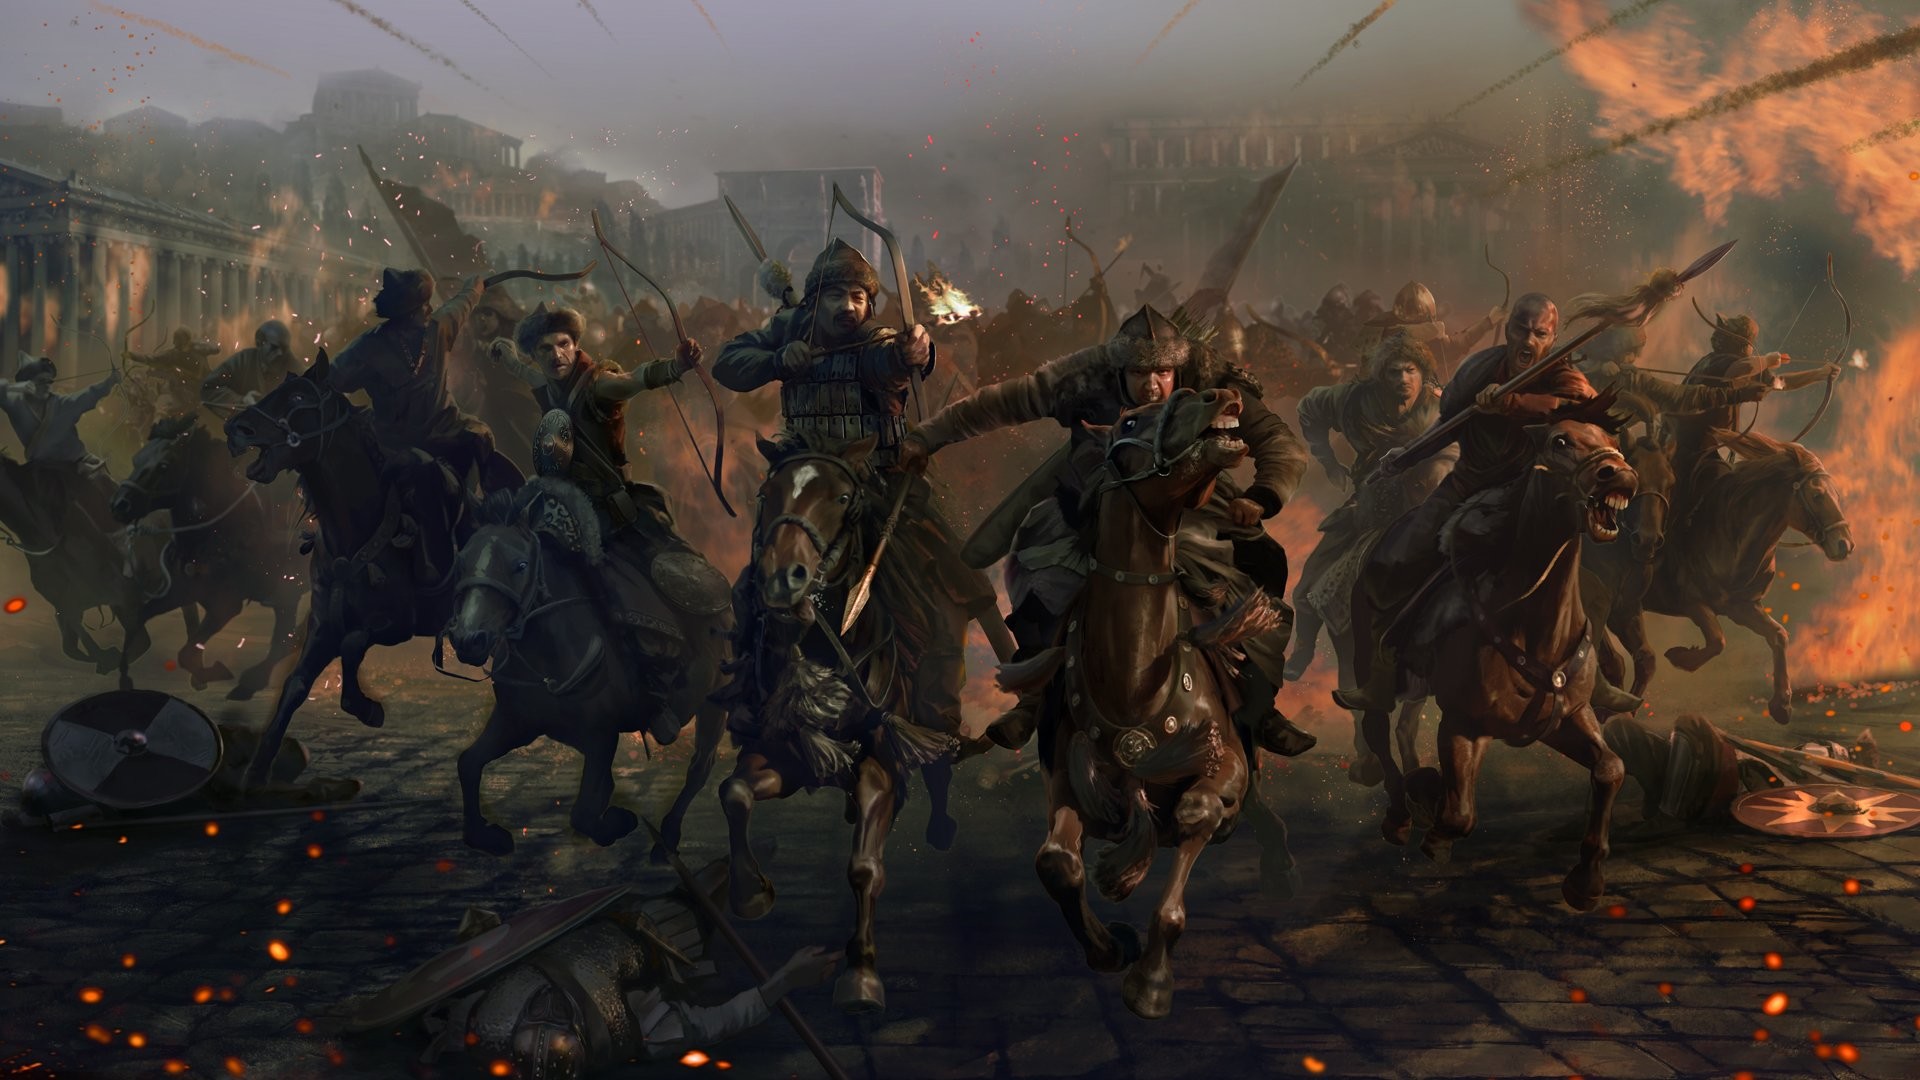 Total War: Warhammer Wallpapers